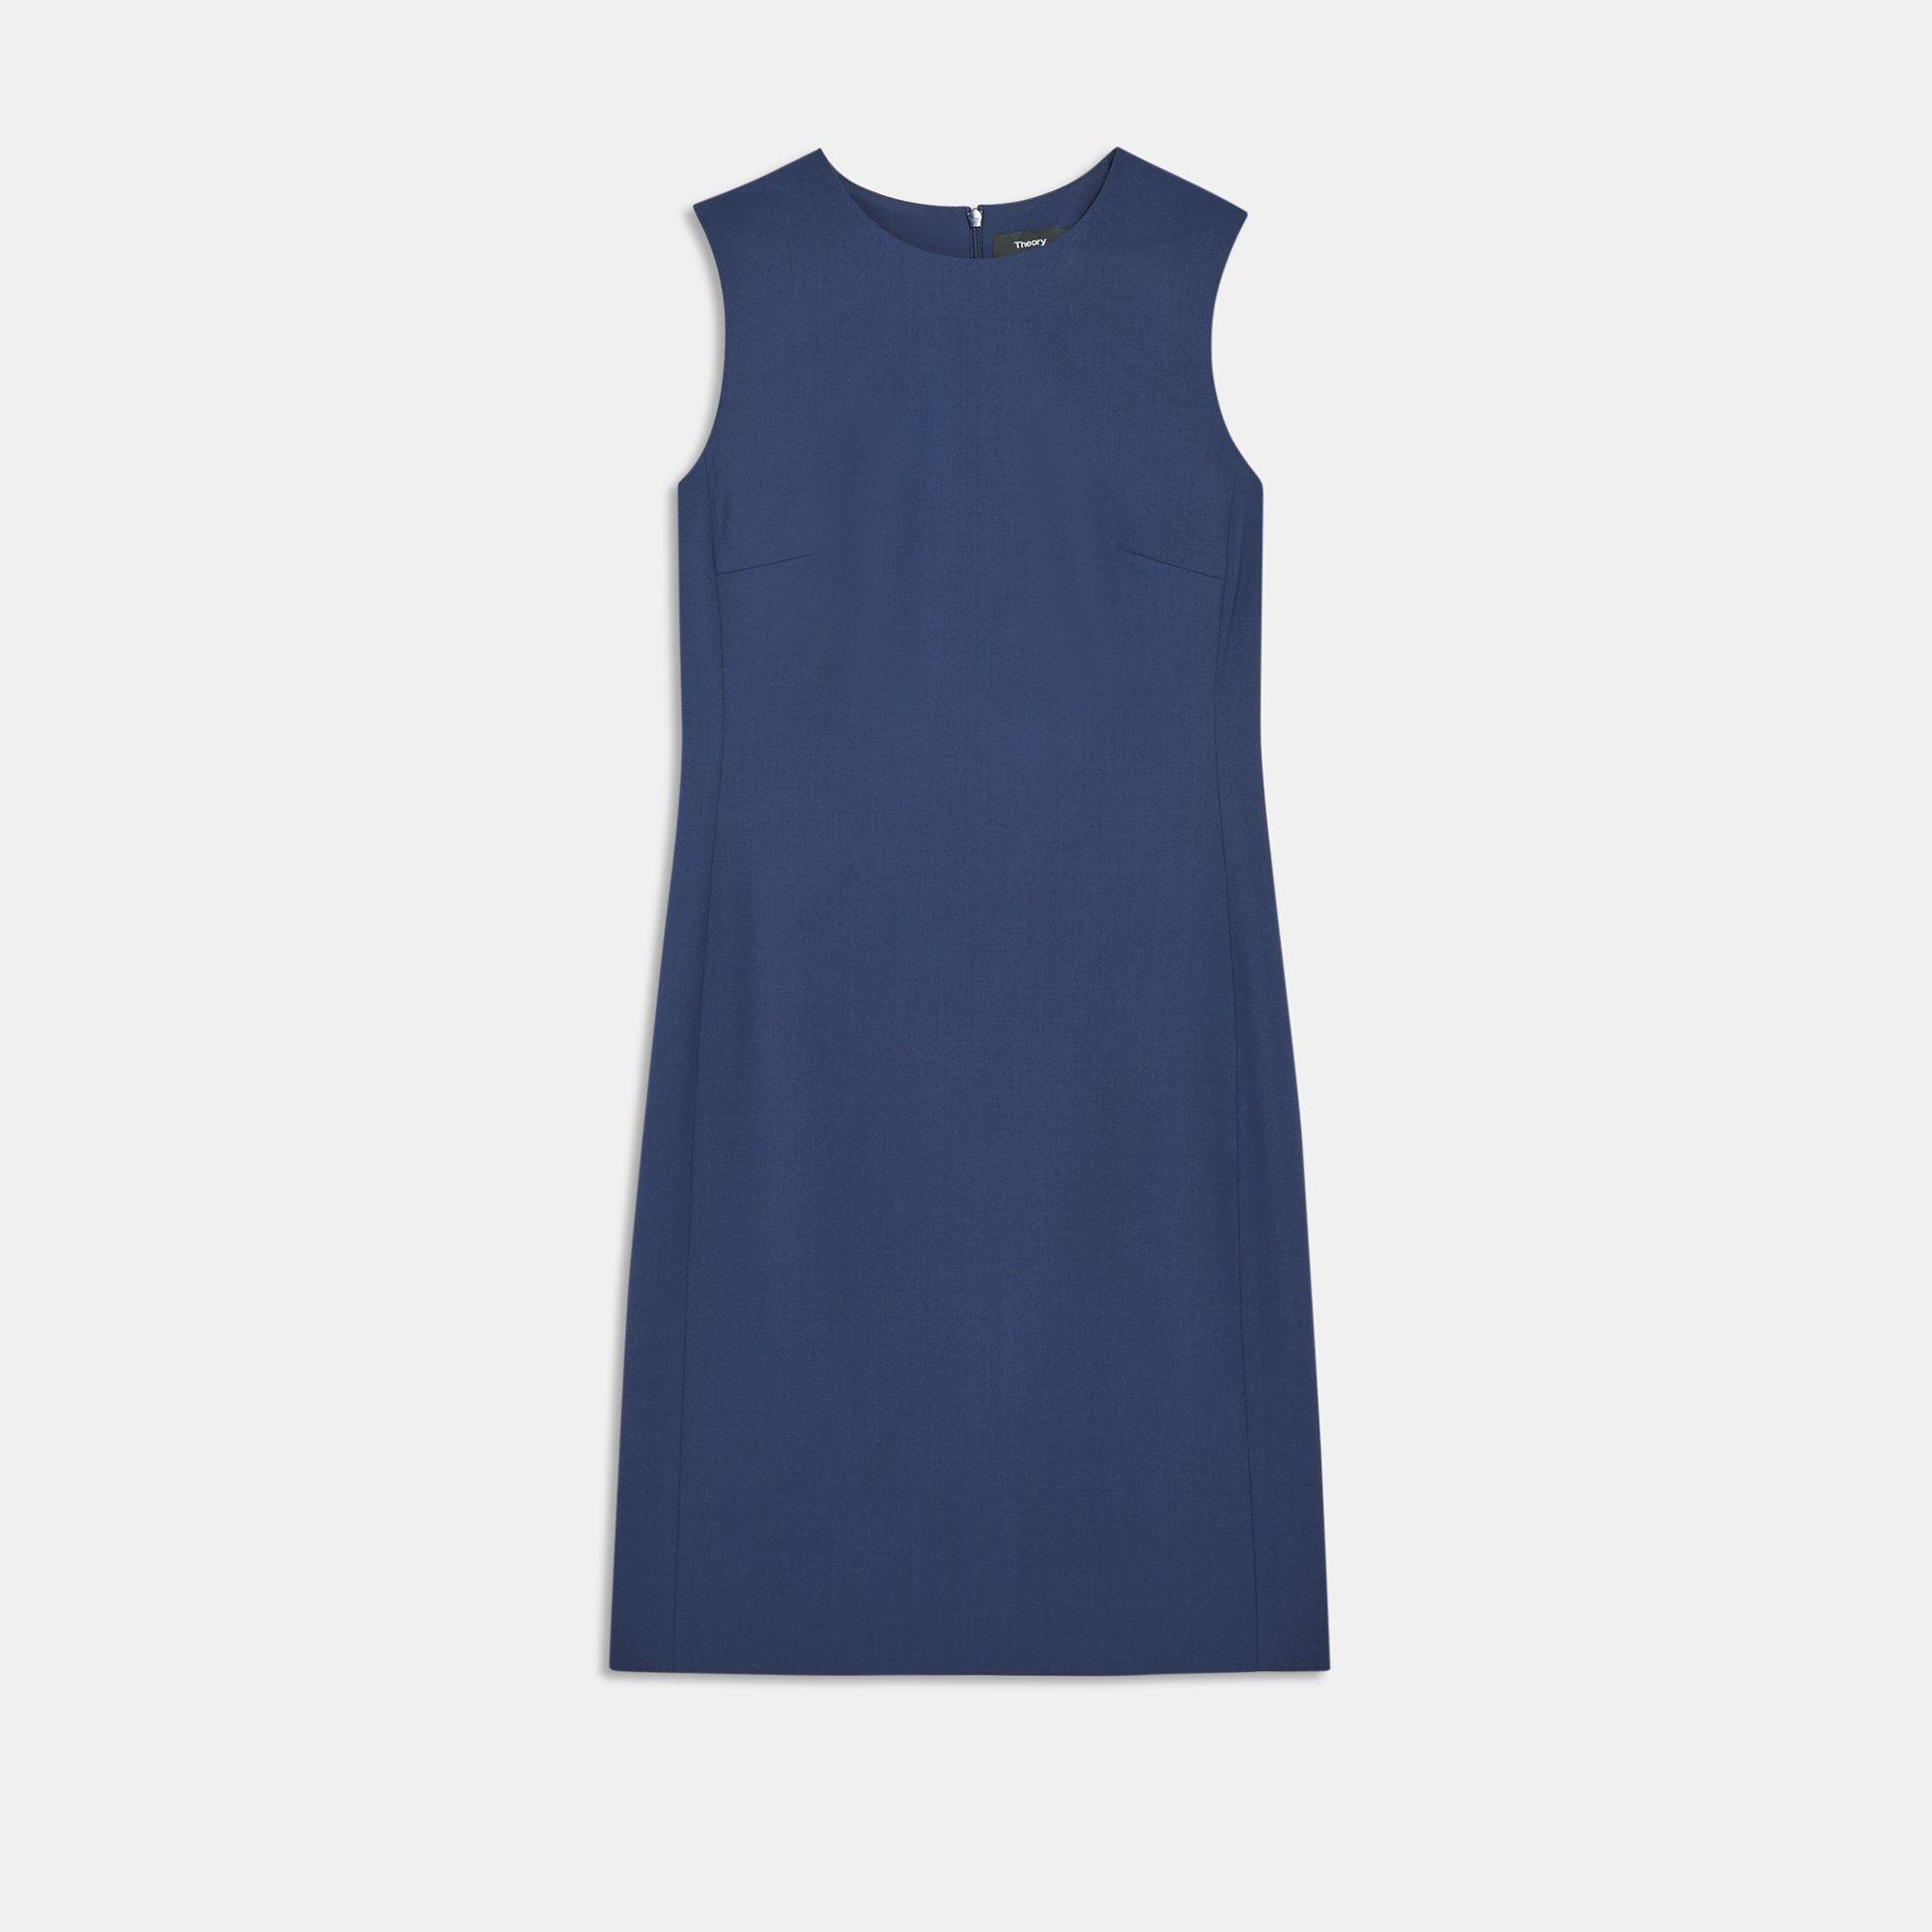 blue sleeveless dress